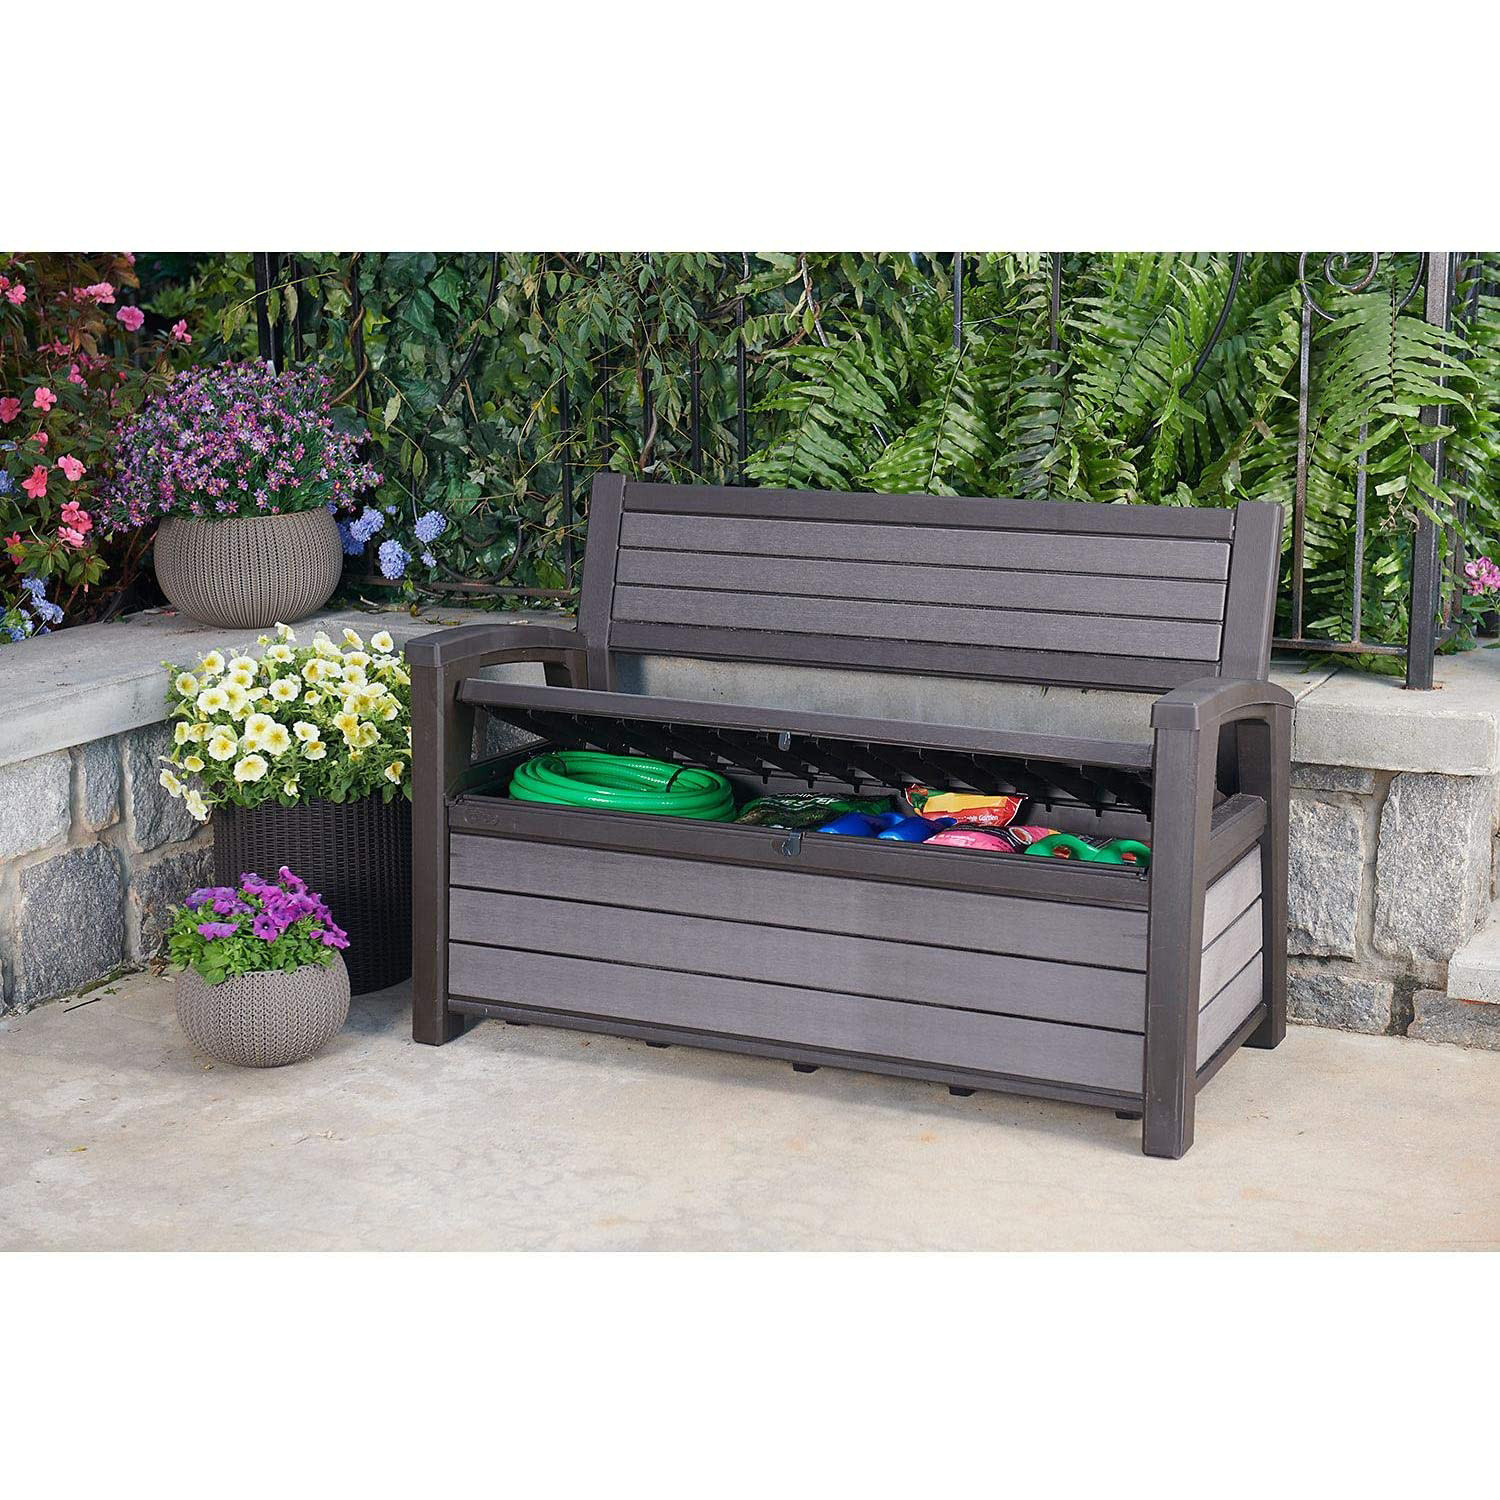 Storage Bench Deck Box
 Keter Hudson 60 Gal Plastic Outdoor Backyard Patio Storage